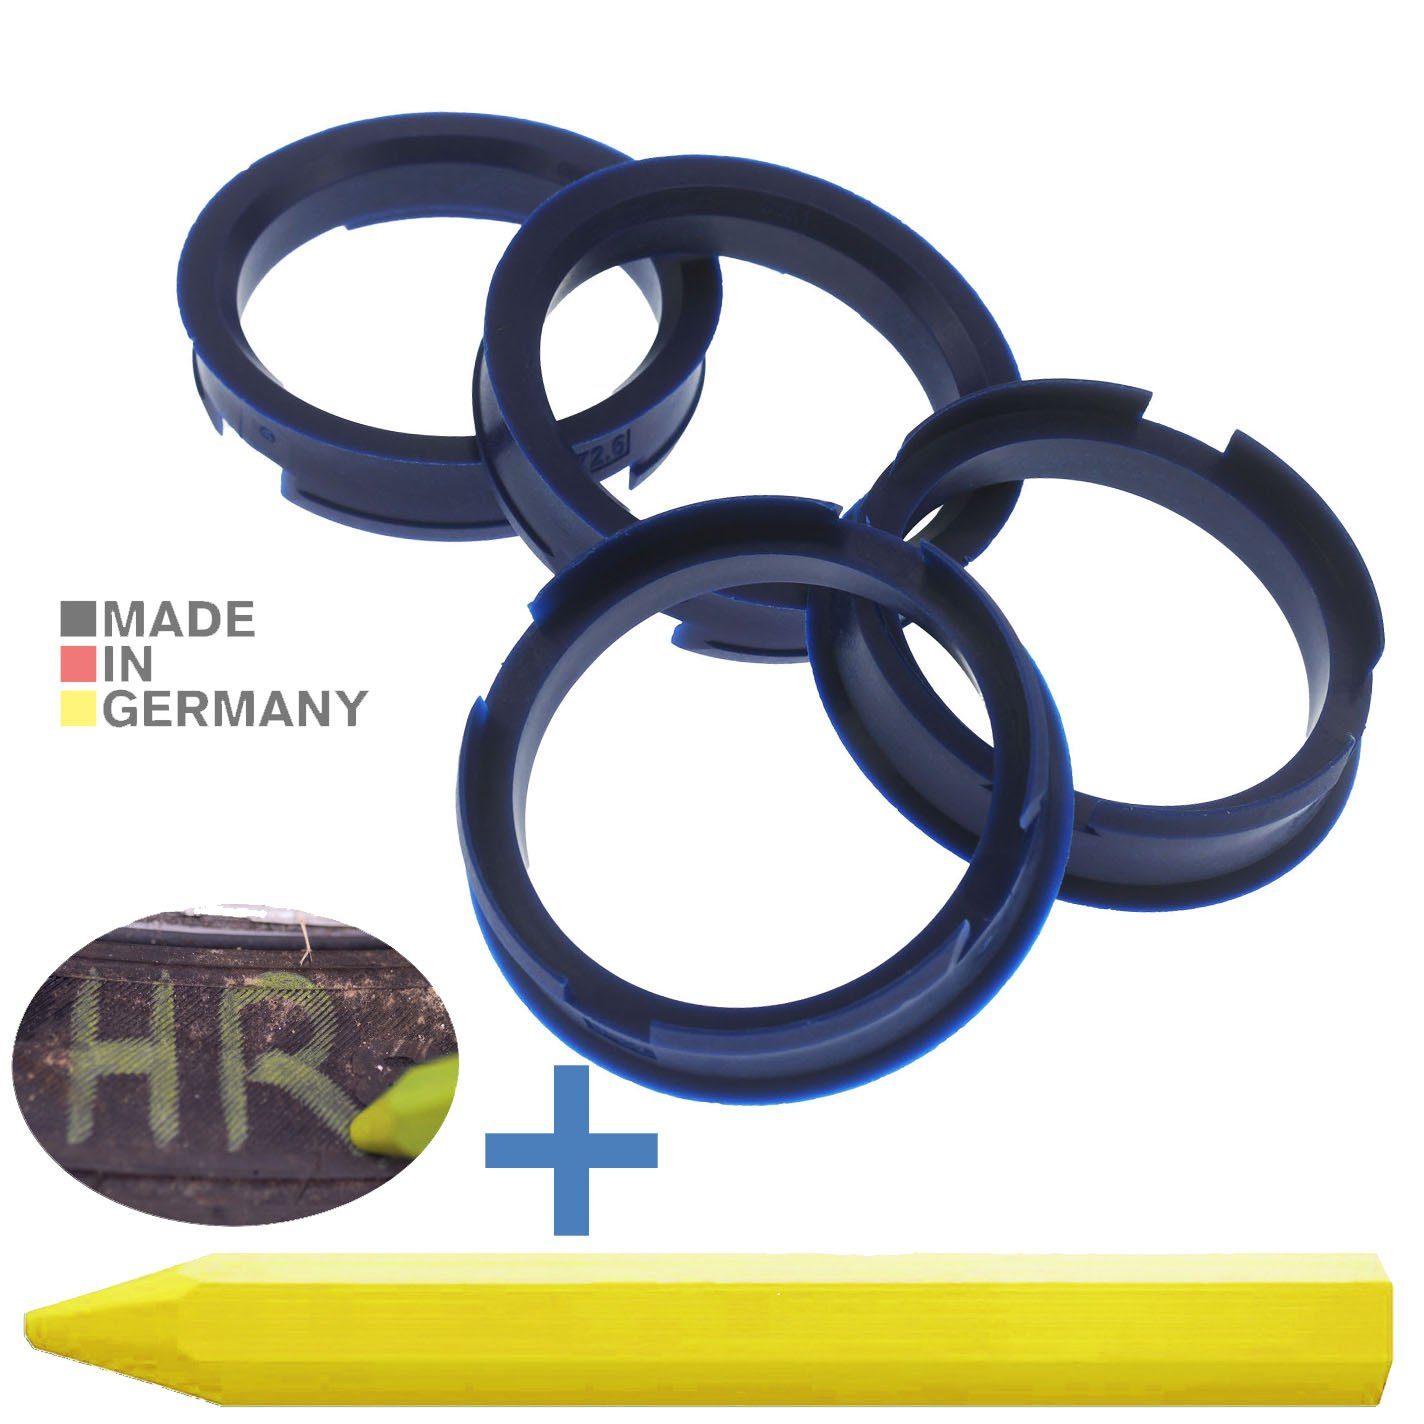 x Felgen Reifen Maße: 1x 60,1 RKC Reifenstift + mm Kreide Zentrierringe Fett 4X Ringe Stift, 72,6 Dunkelblau